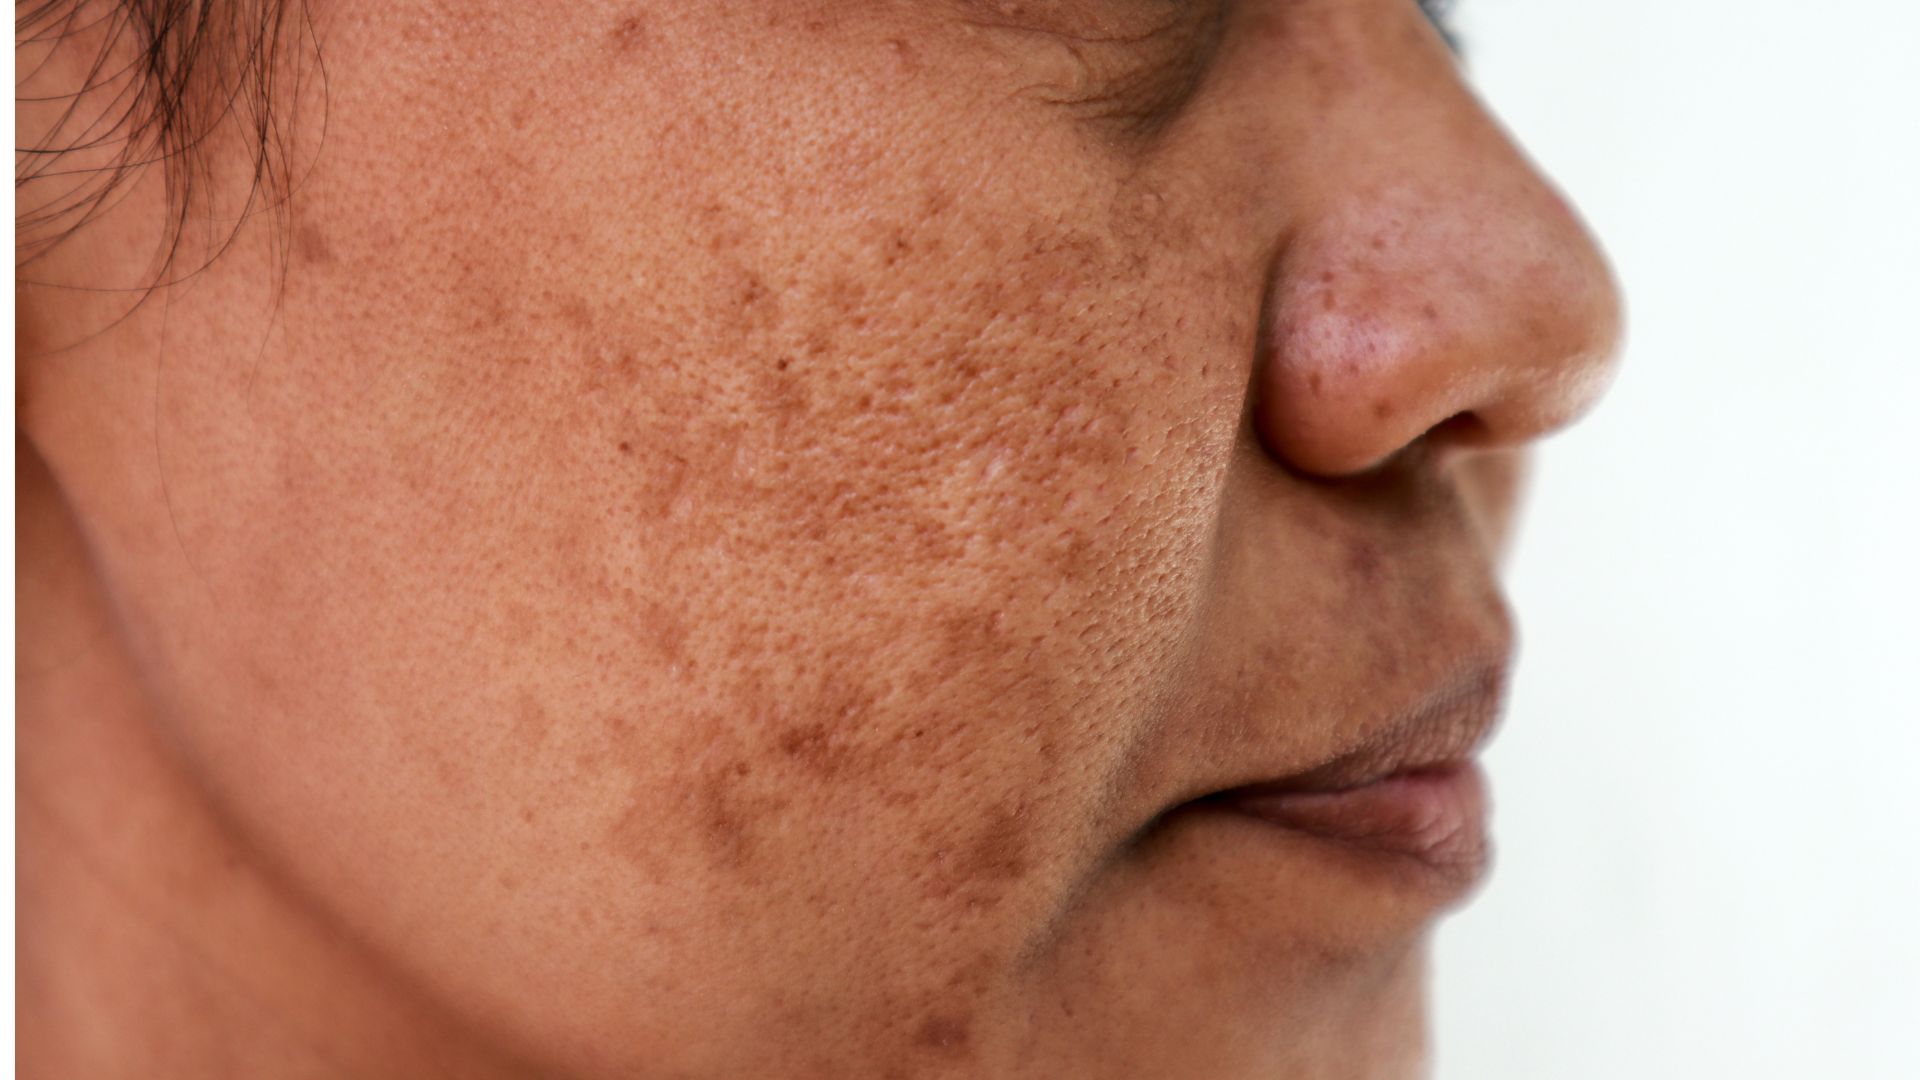 Brown spots on skin